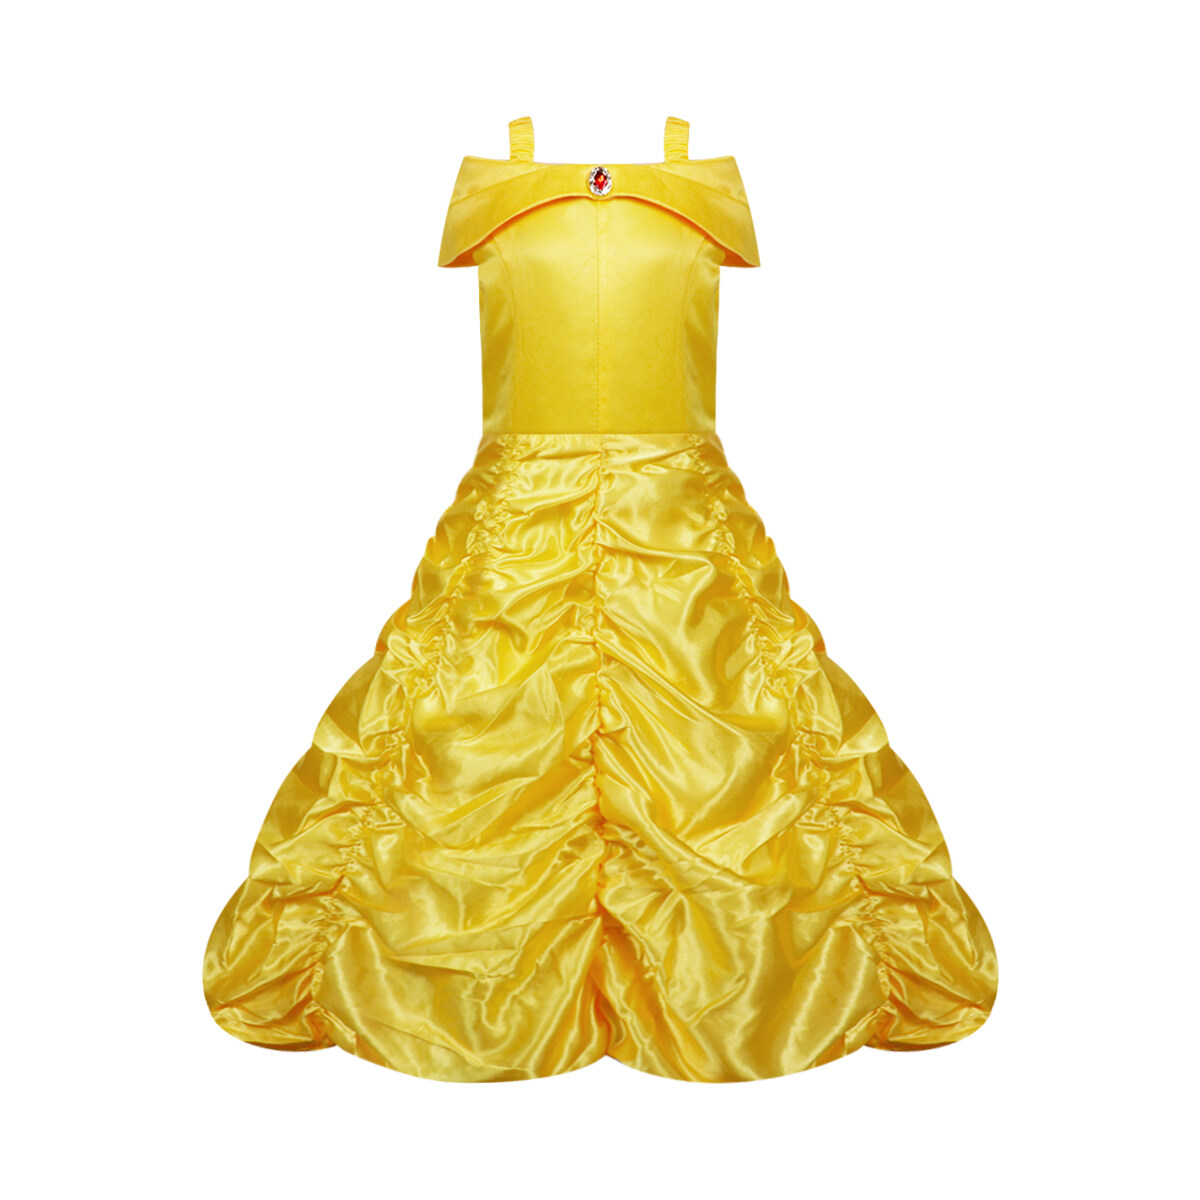 KAWELL Princess Yellow Beller Girl's Christmas Fancy-Dress Costume, Toddler 3T - image 1 of 6